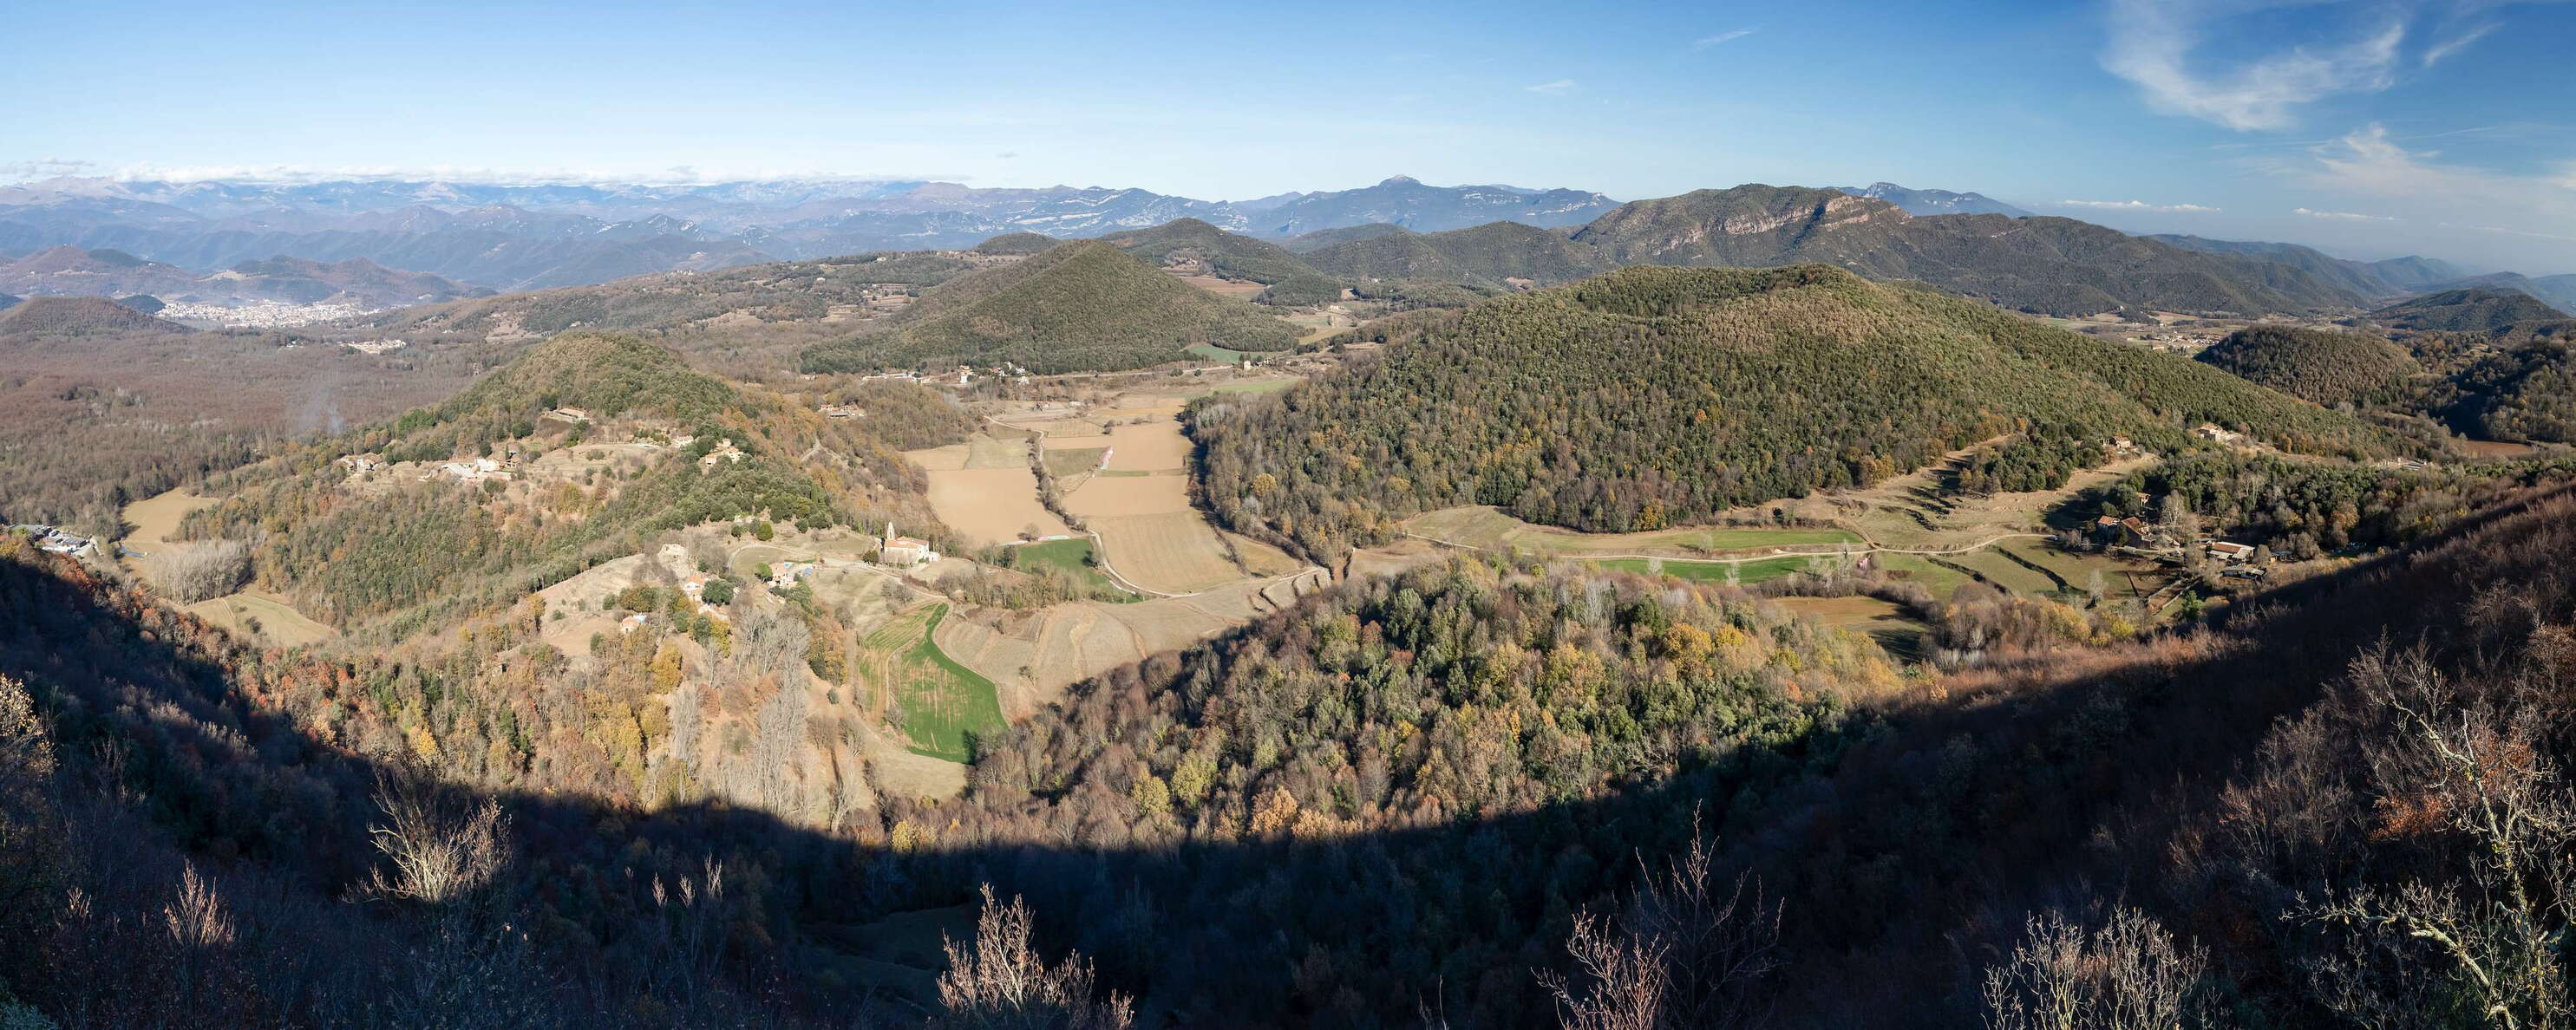 La Garrotxa | Panoramic view with Volcà de Santa Margarida